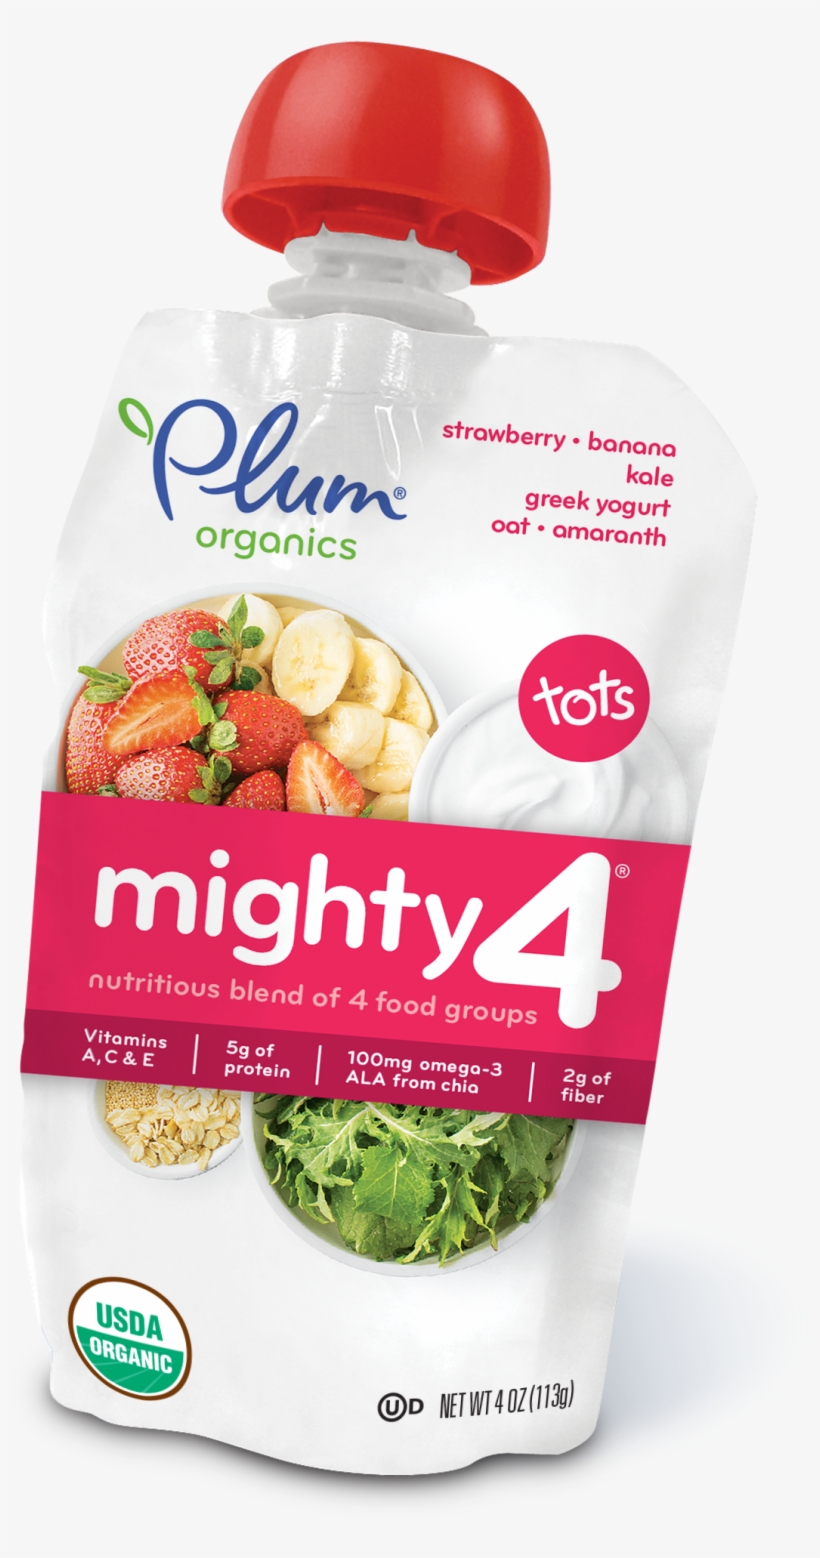 Strawberry•banana, Kale, Greek Yogurt, Oat•amaranth - Plum Organics Mighty 4, transparent png #1389957